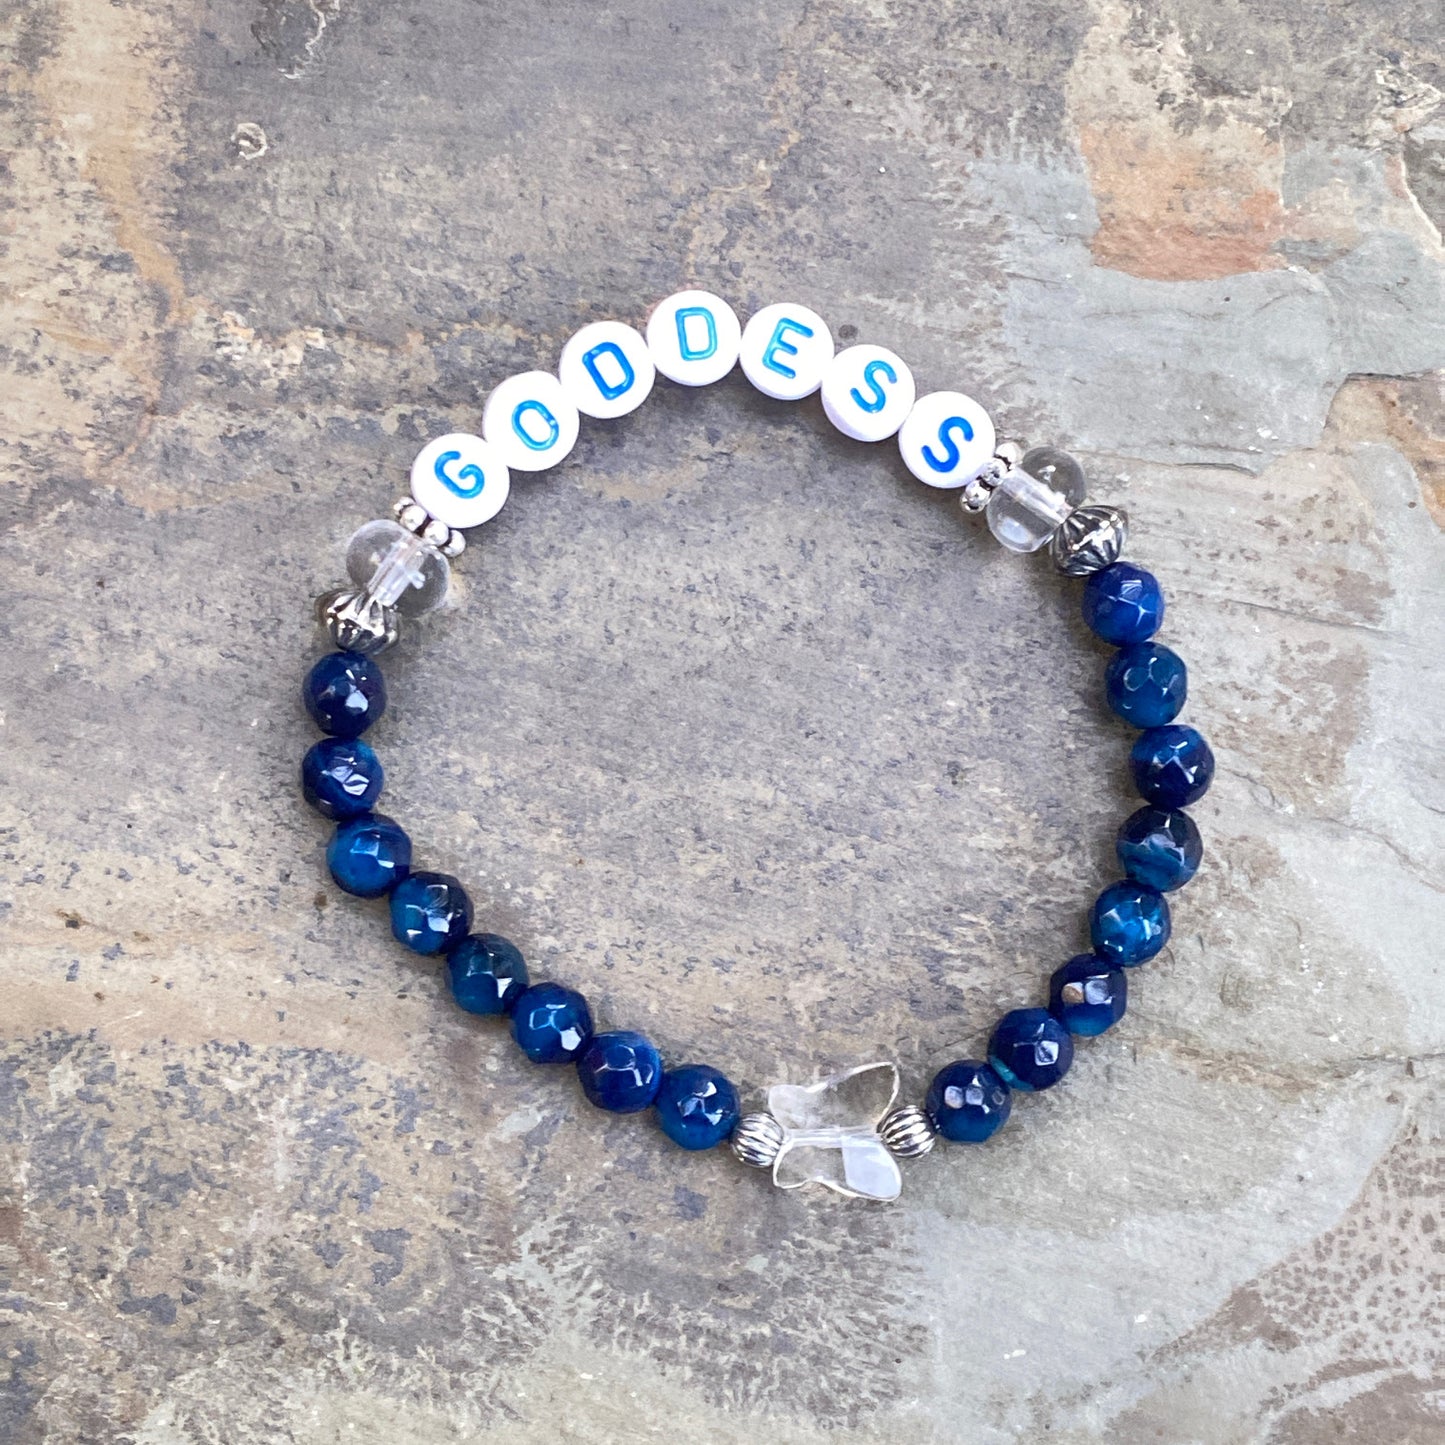 Blue Agate, Clear Quartz, and Sterling Silver “GODDESS” Stretch Bracelet